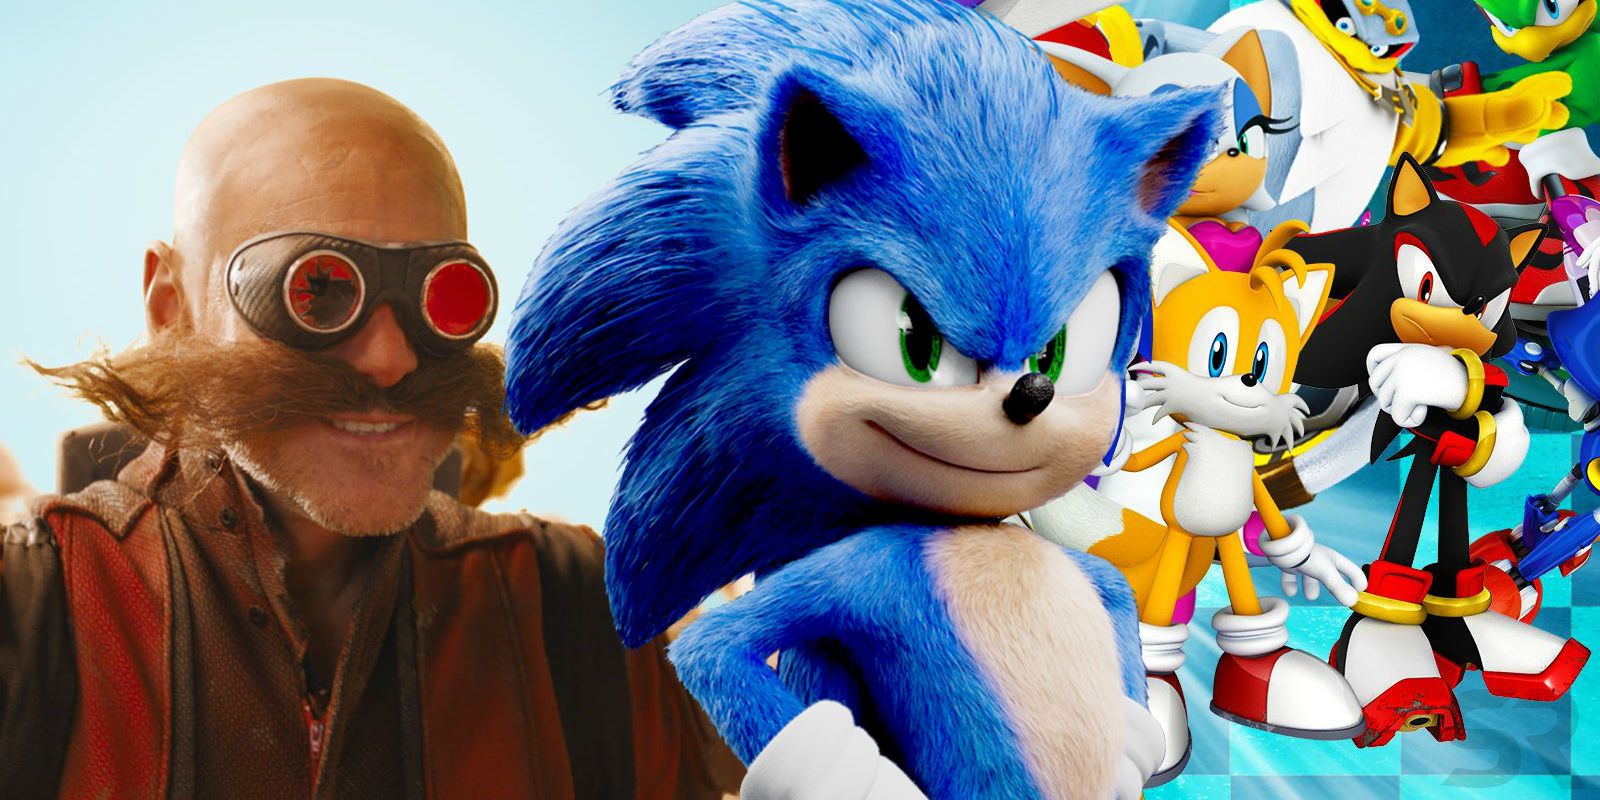 breaking news Shadow is in Sonic 2 and its chris : r/Gamingcirclejerk